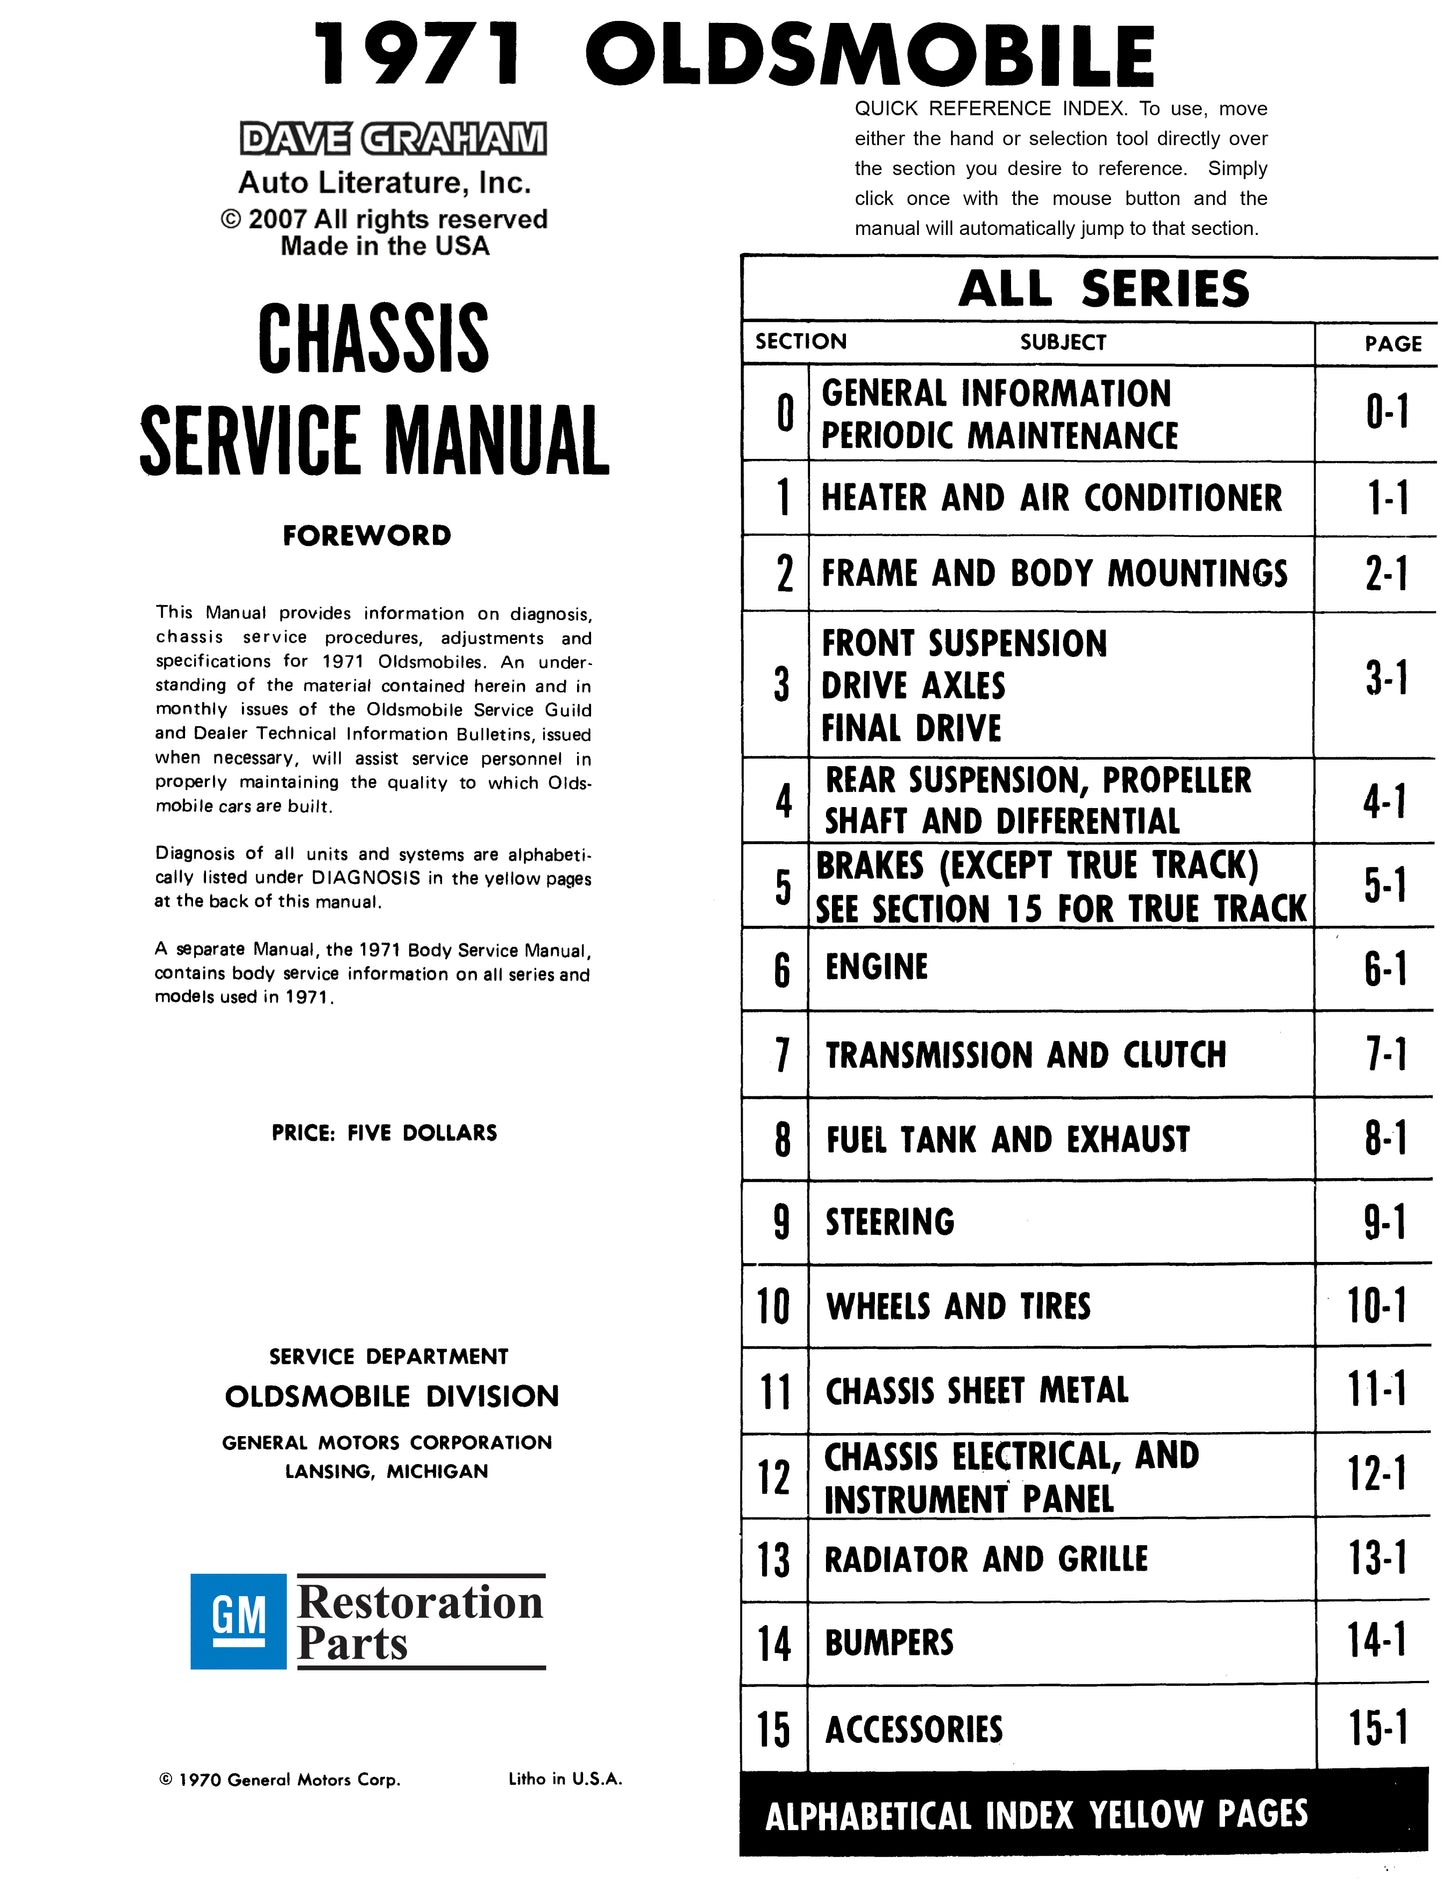 1971 Oldsmobile Shop Manual & Body Manual - All Models